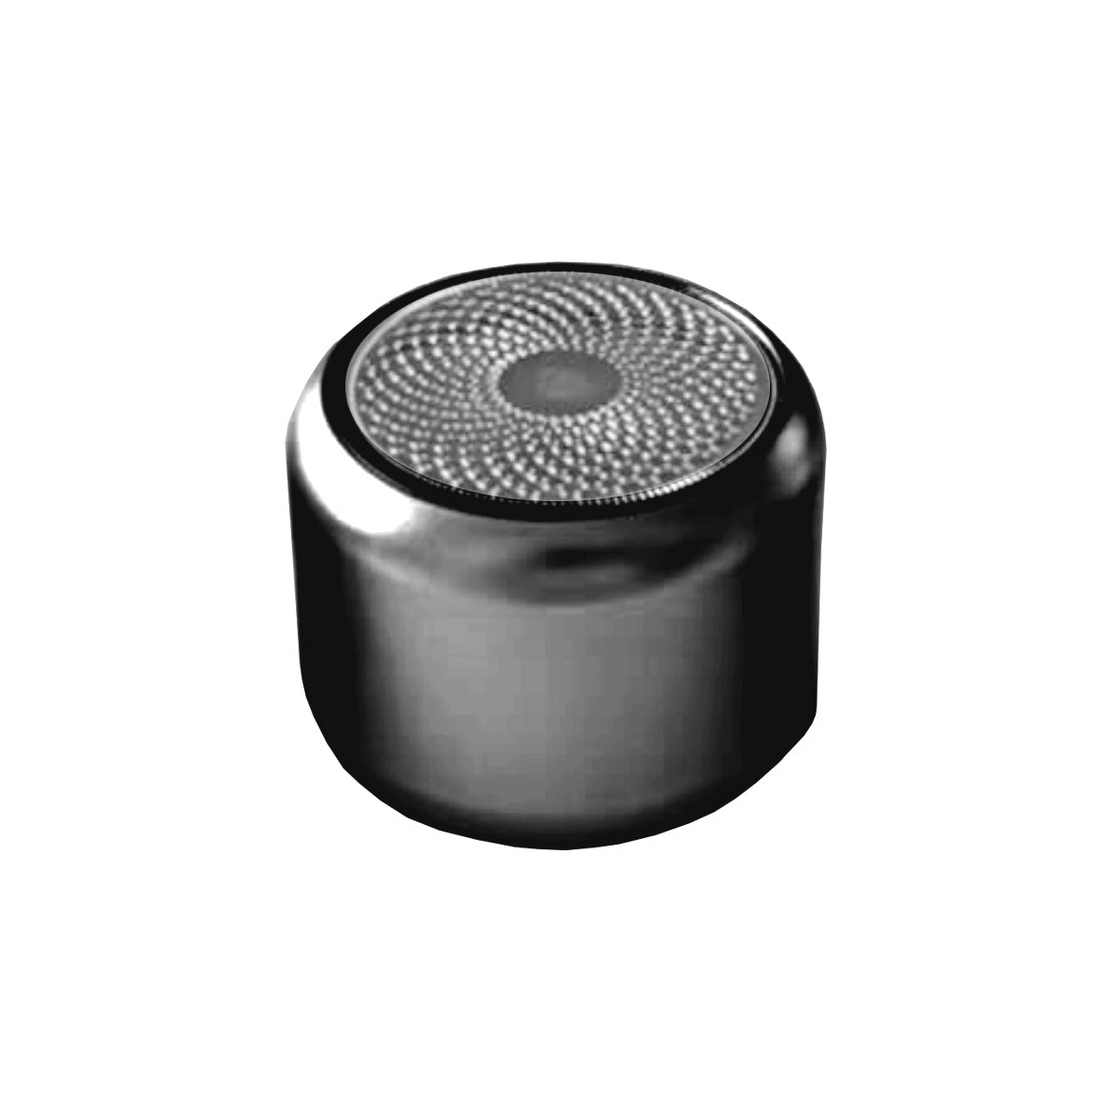 Metallio Bluetooth Enabled Pocket Speaker - Portable Mini Speaker with Big Sound